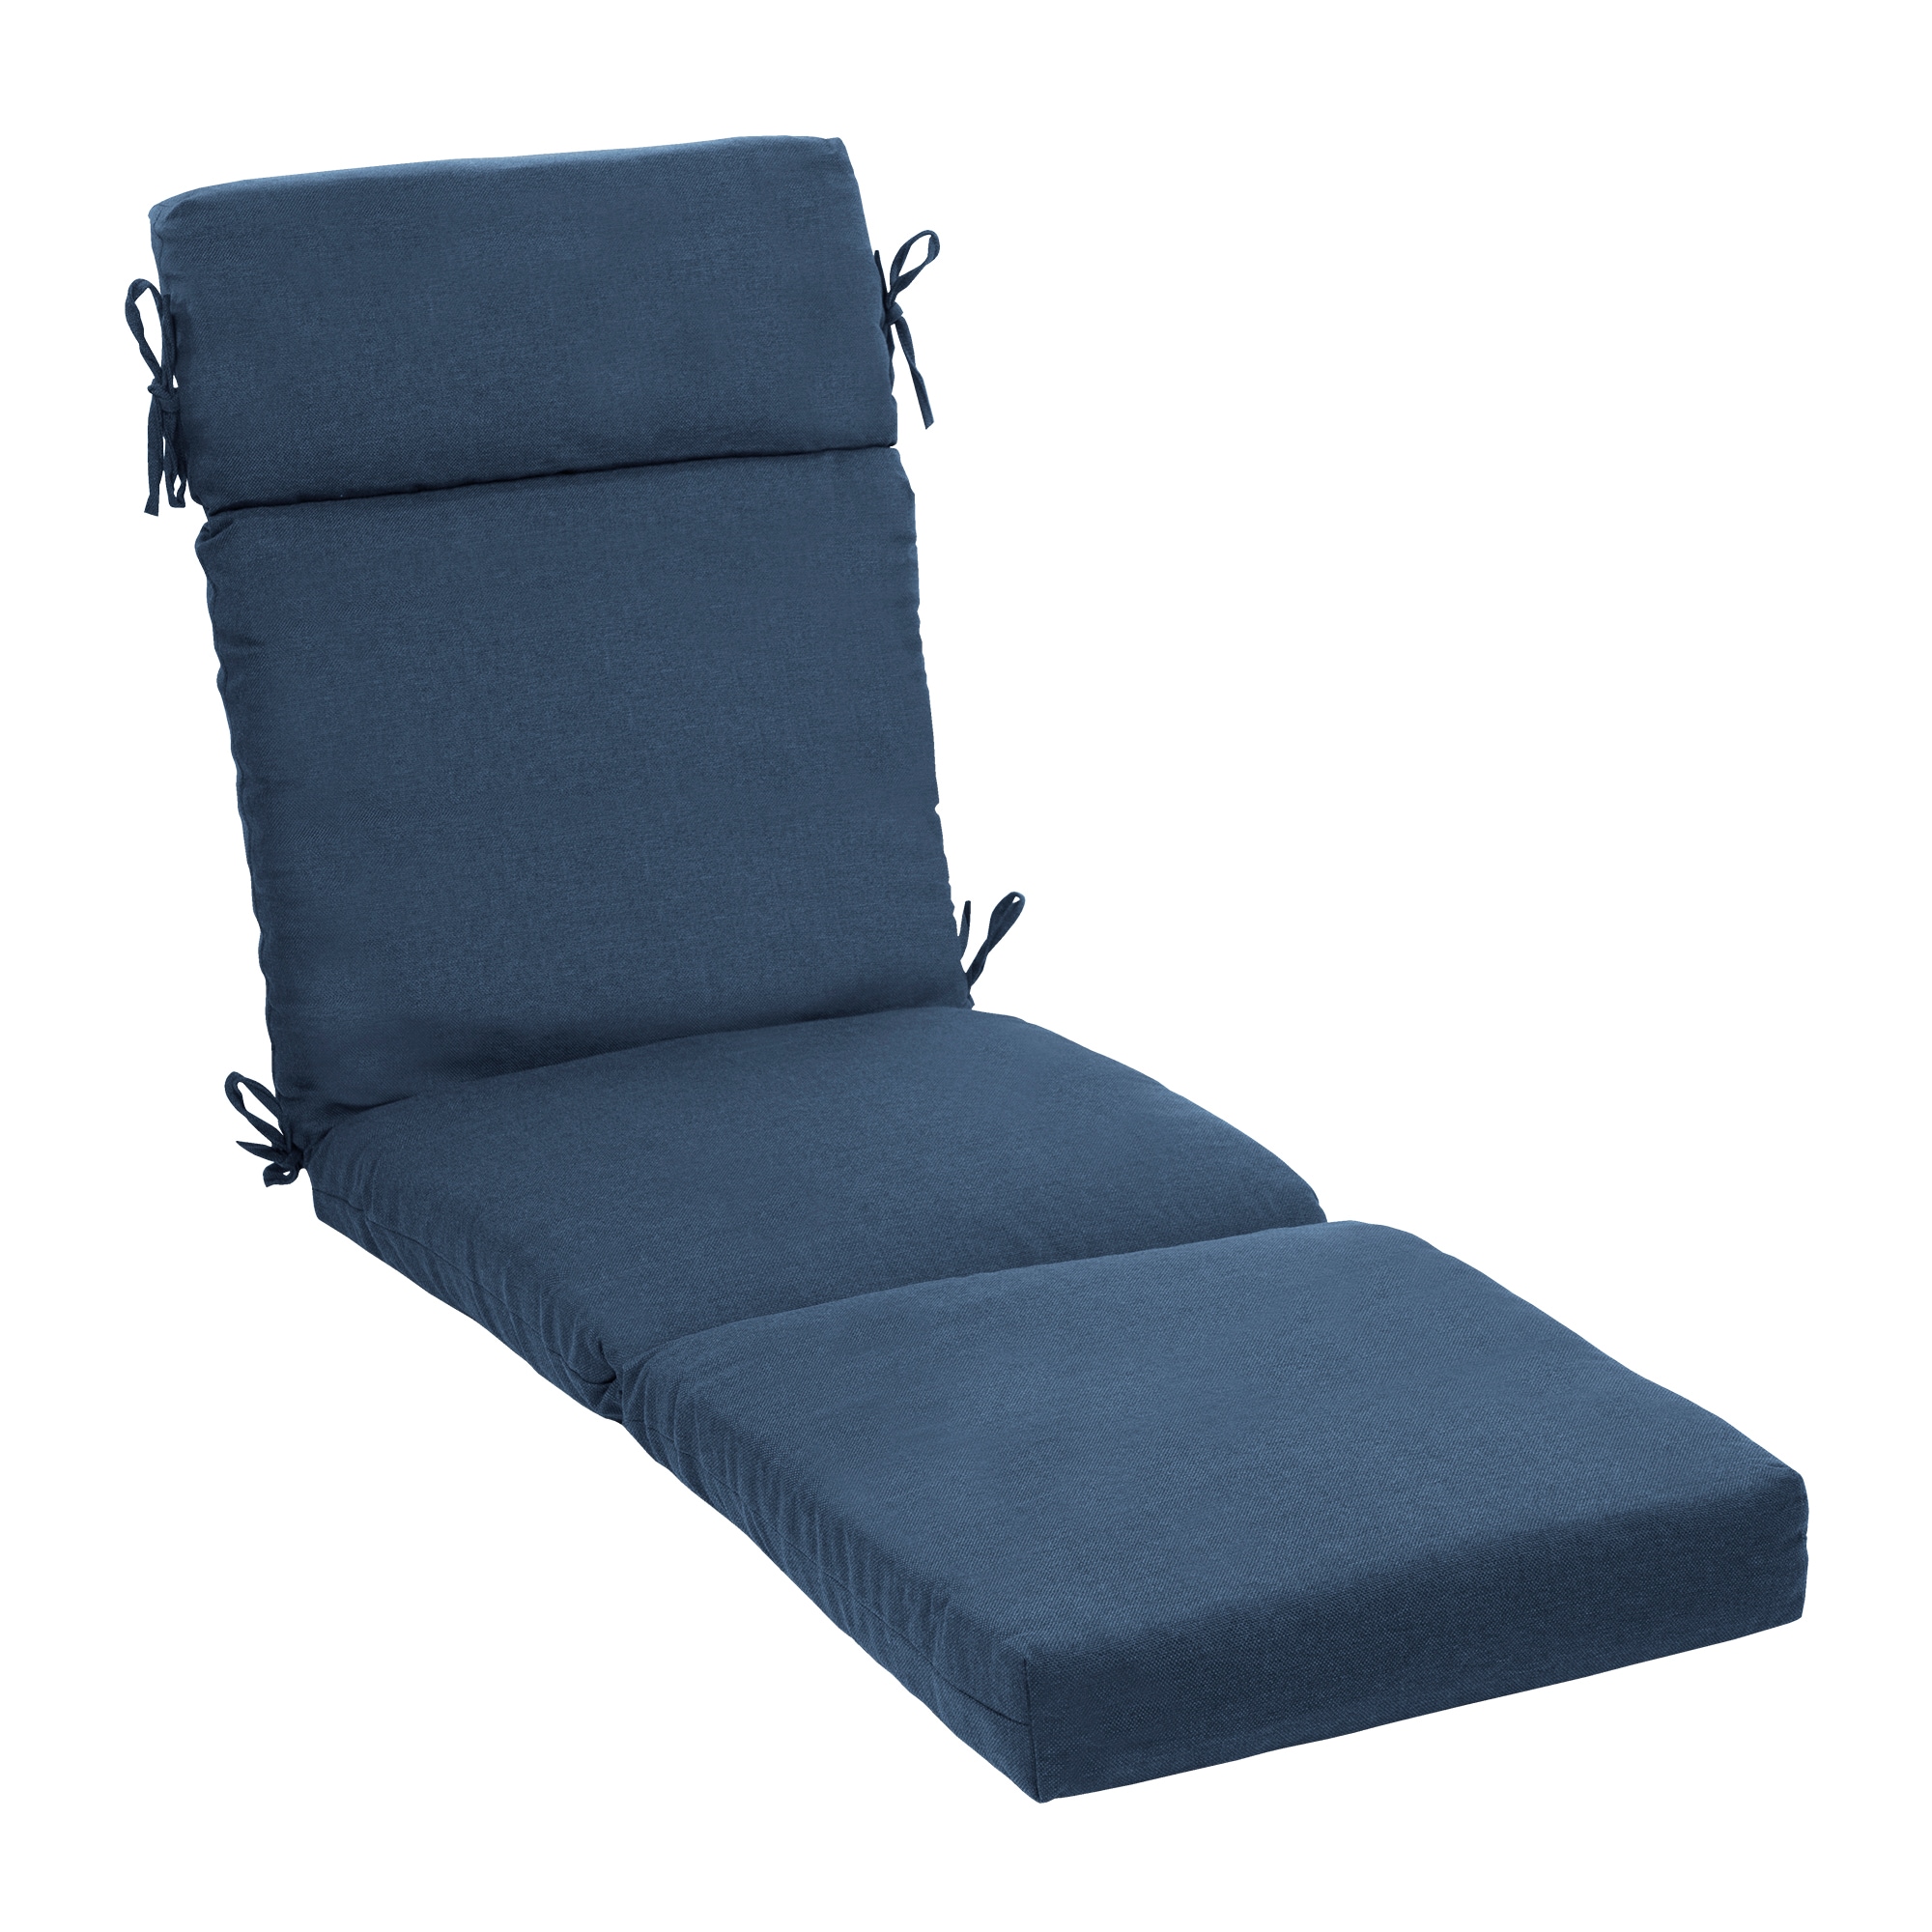 Polyester Classic Swing/Bench Cushion, 47 x 16x 3 - Blue Sky